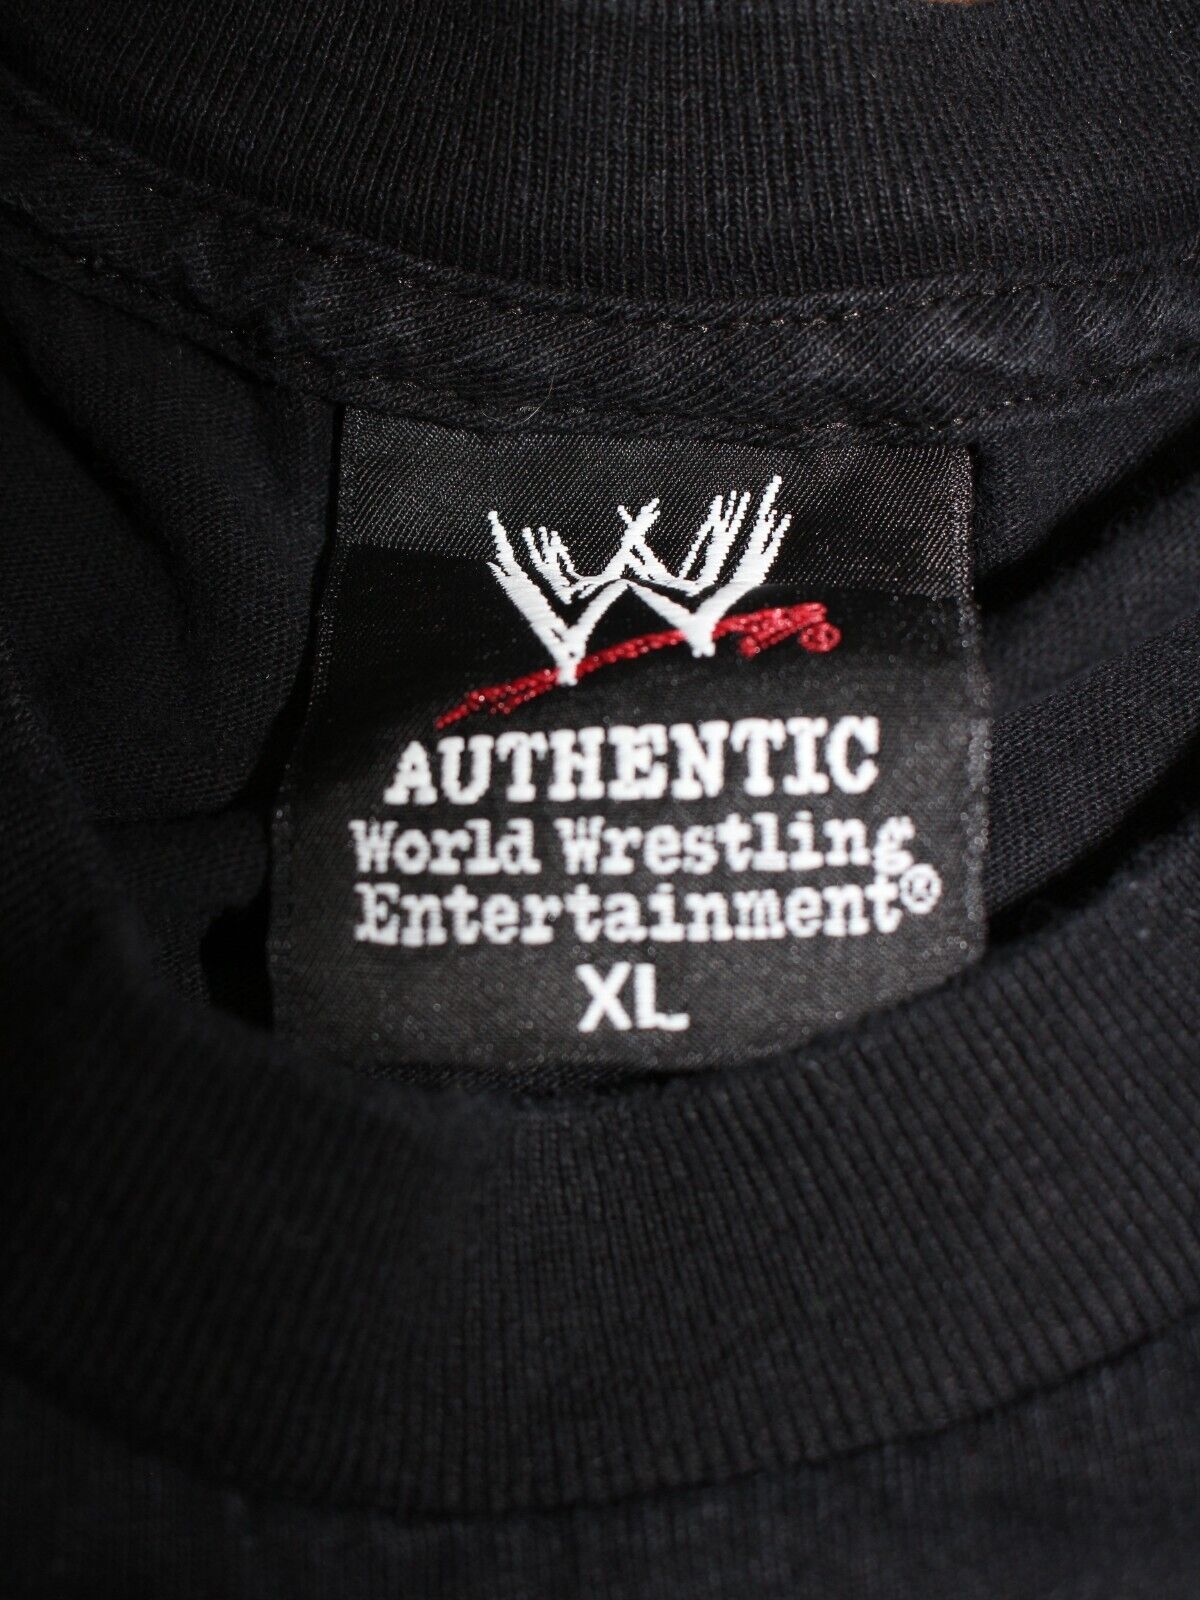 Ric Flair Four Horsemen WCW WWF Wrestling T Shirt… - image 3